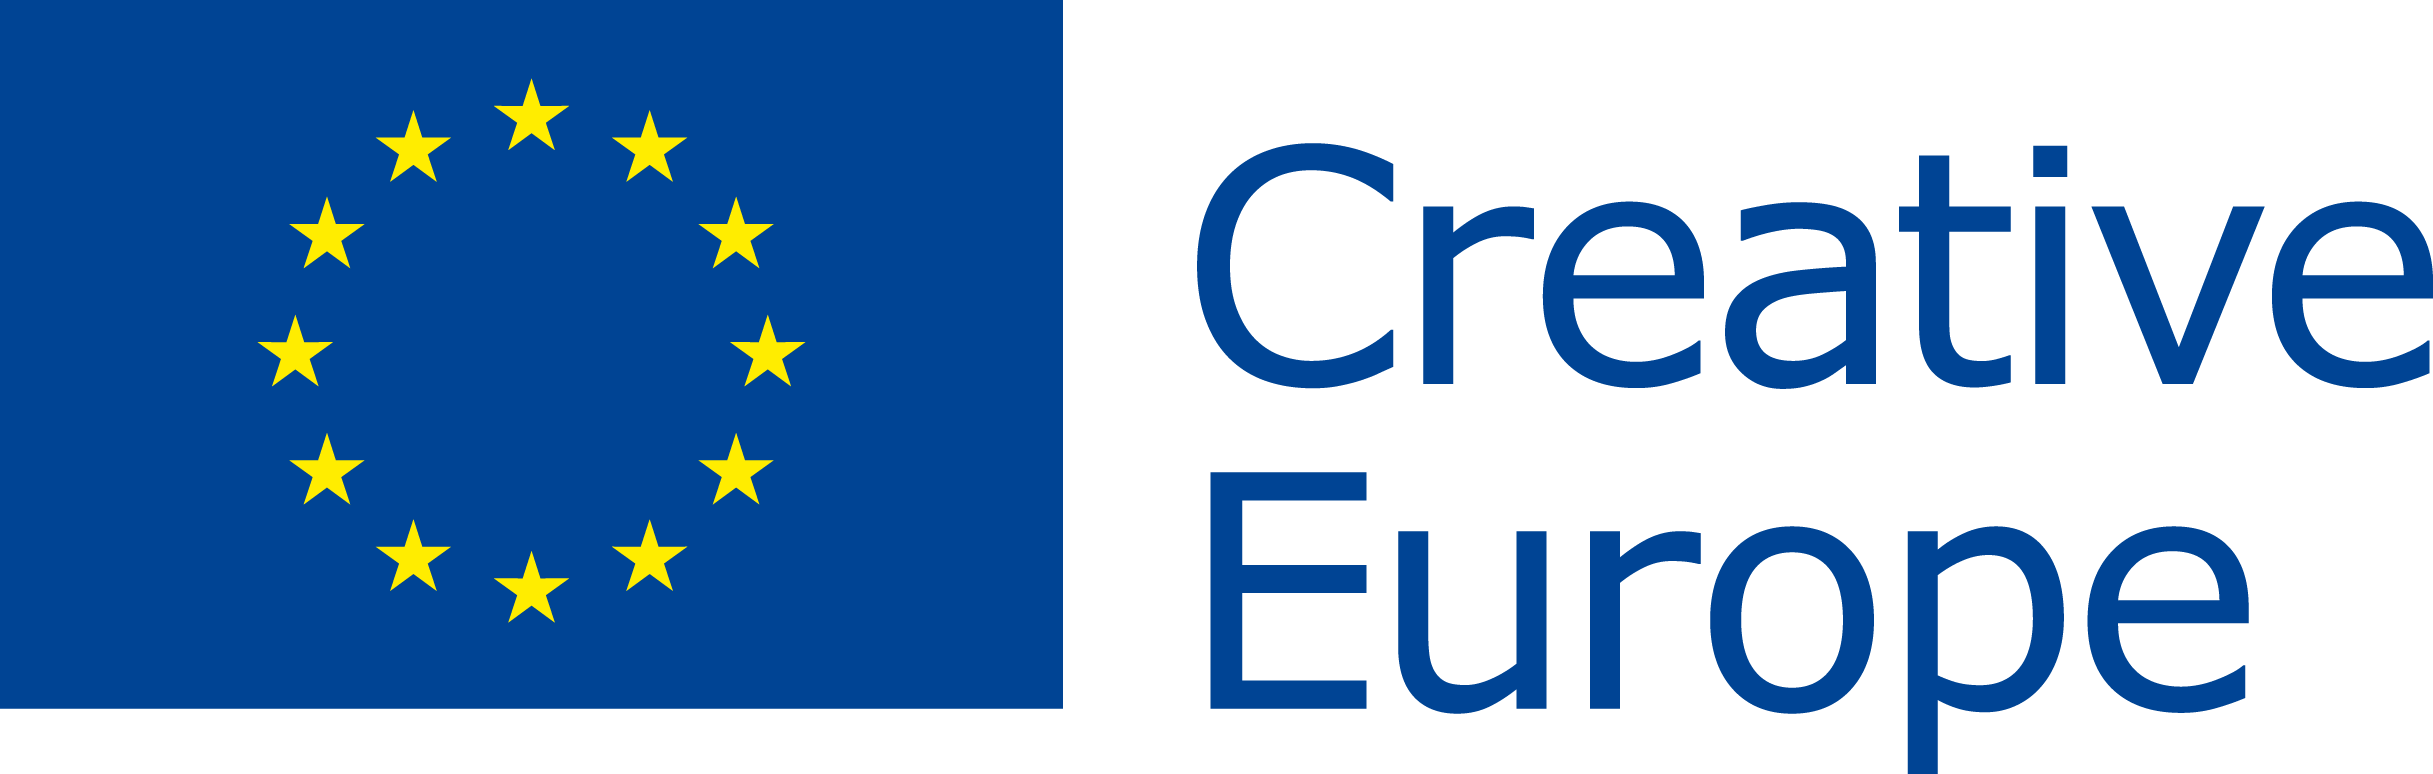 Creative Europe logo